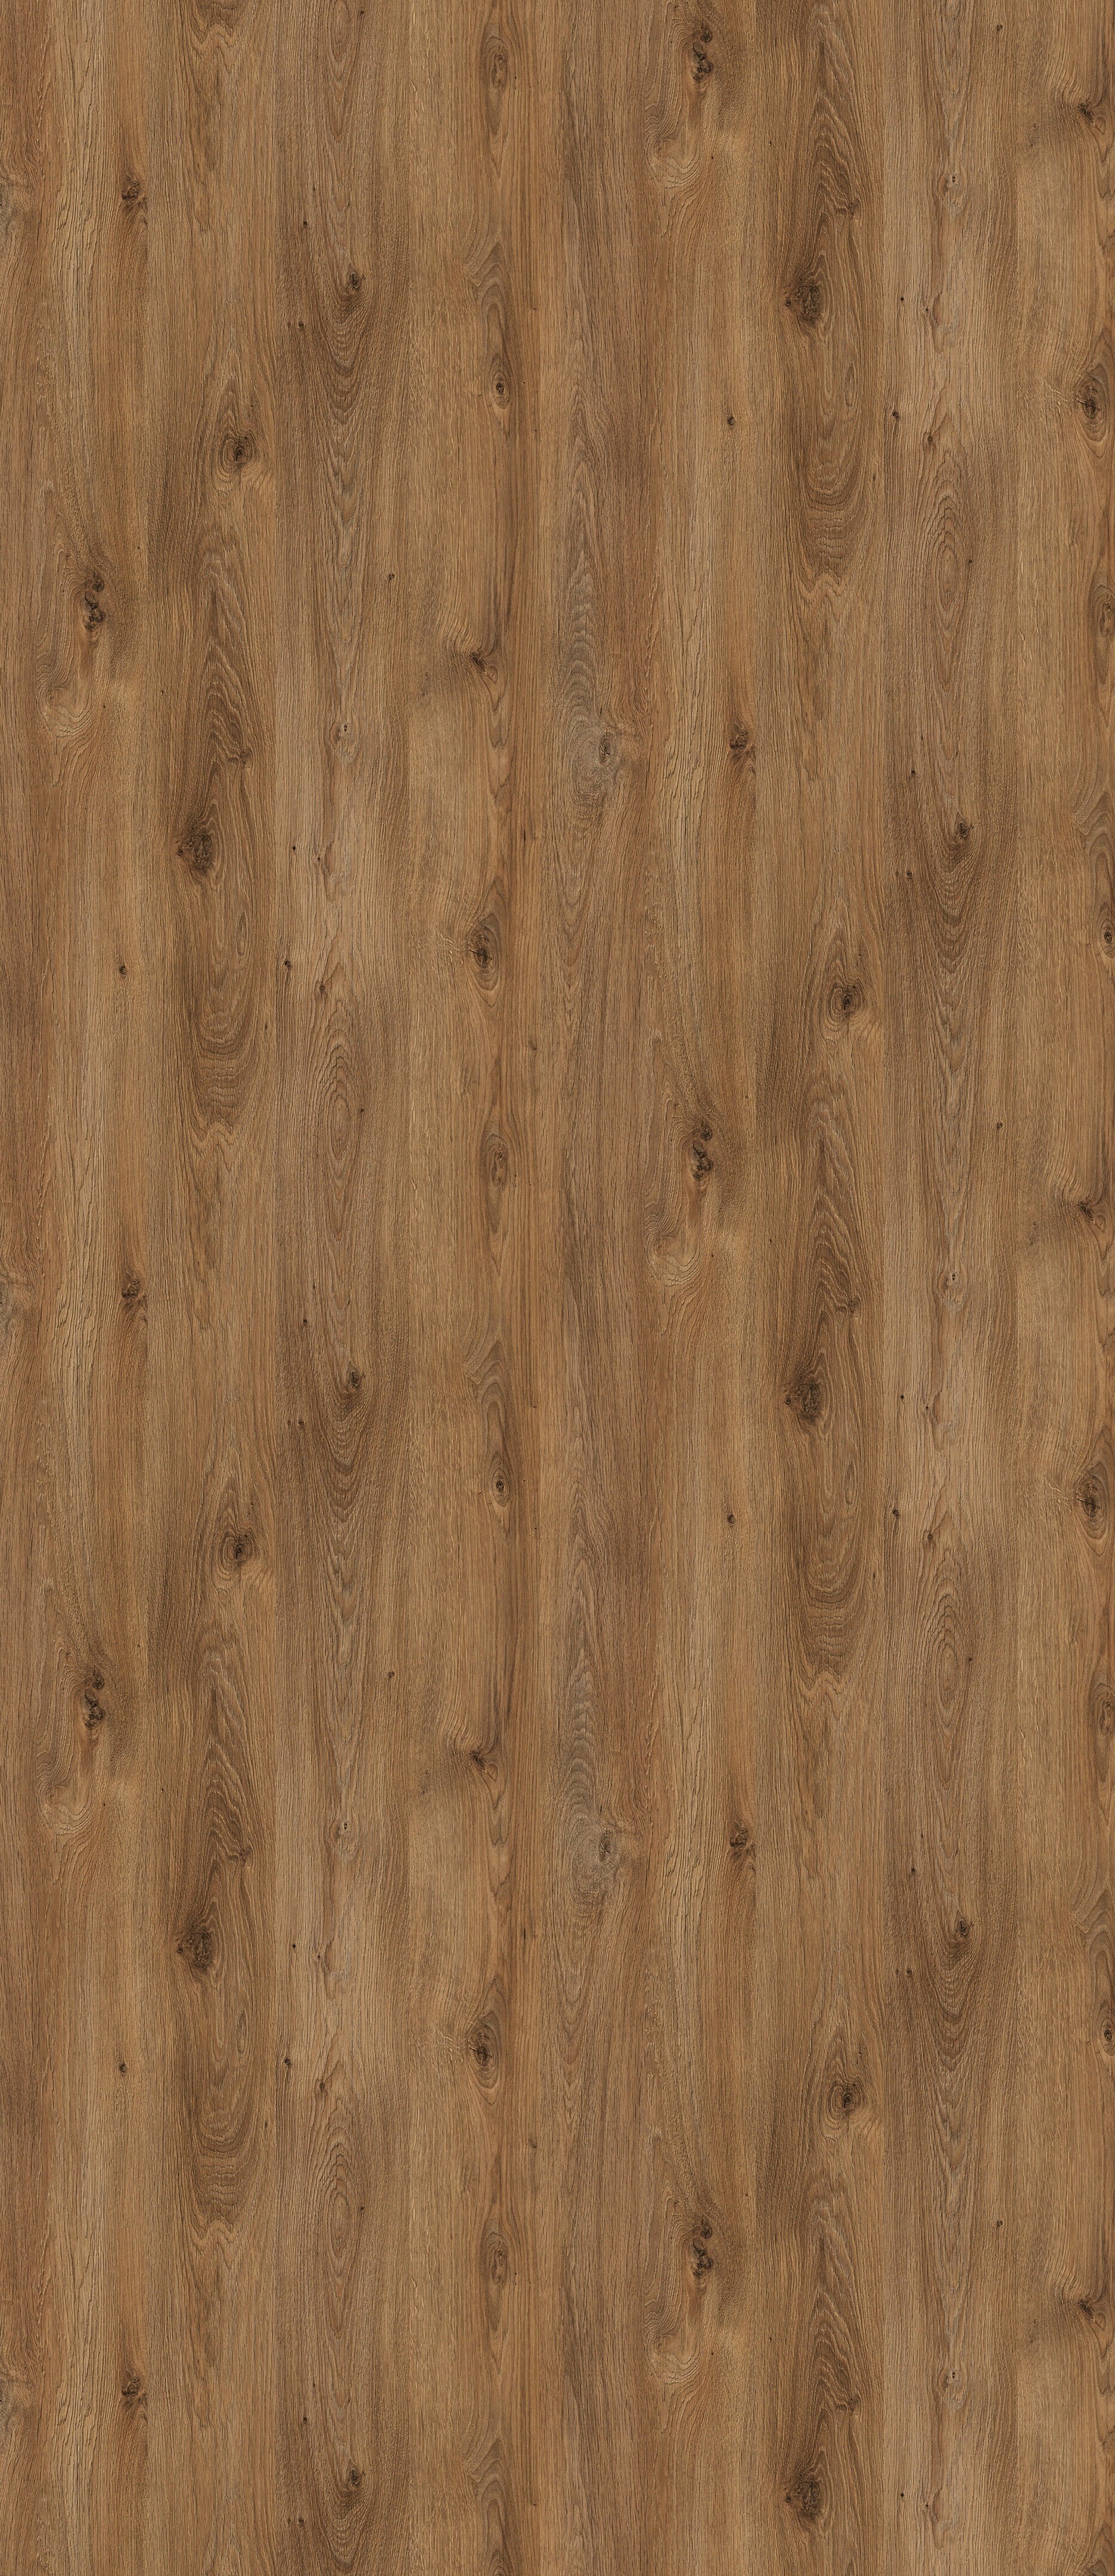 Image of Wickes Wood Effect Laminate Edging - Pati Oak - 42 x 3000mm